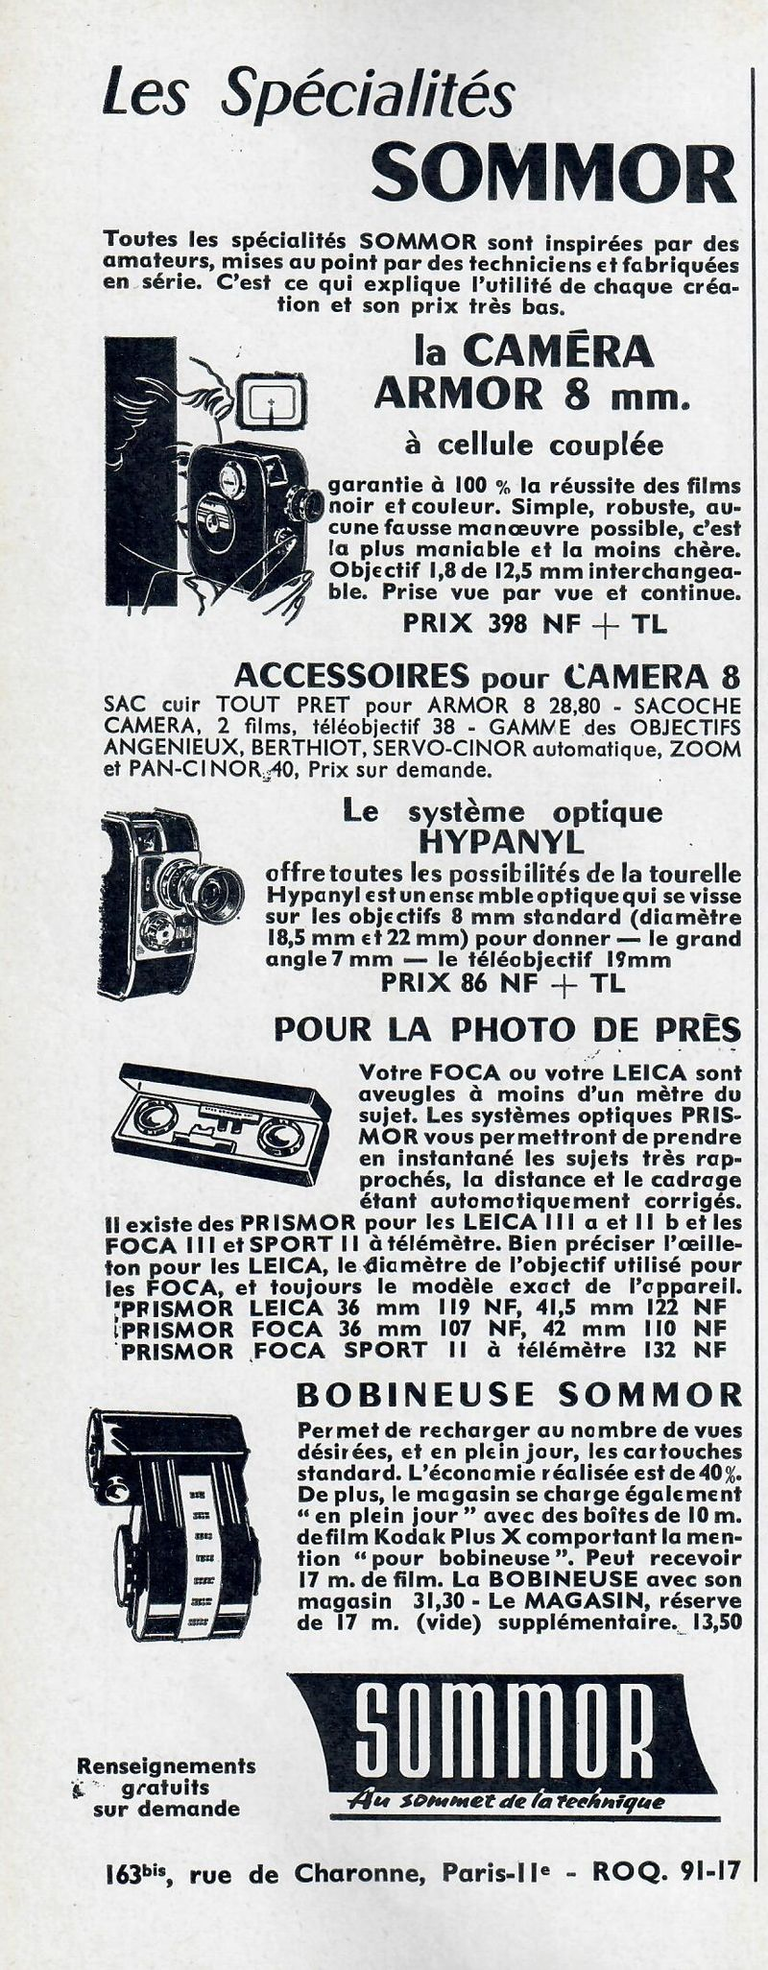 Sommor Armor 8mm, Hypanyl, Prismor, bobineuse - Photo Cinéma - mars 1961